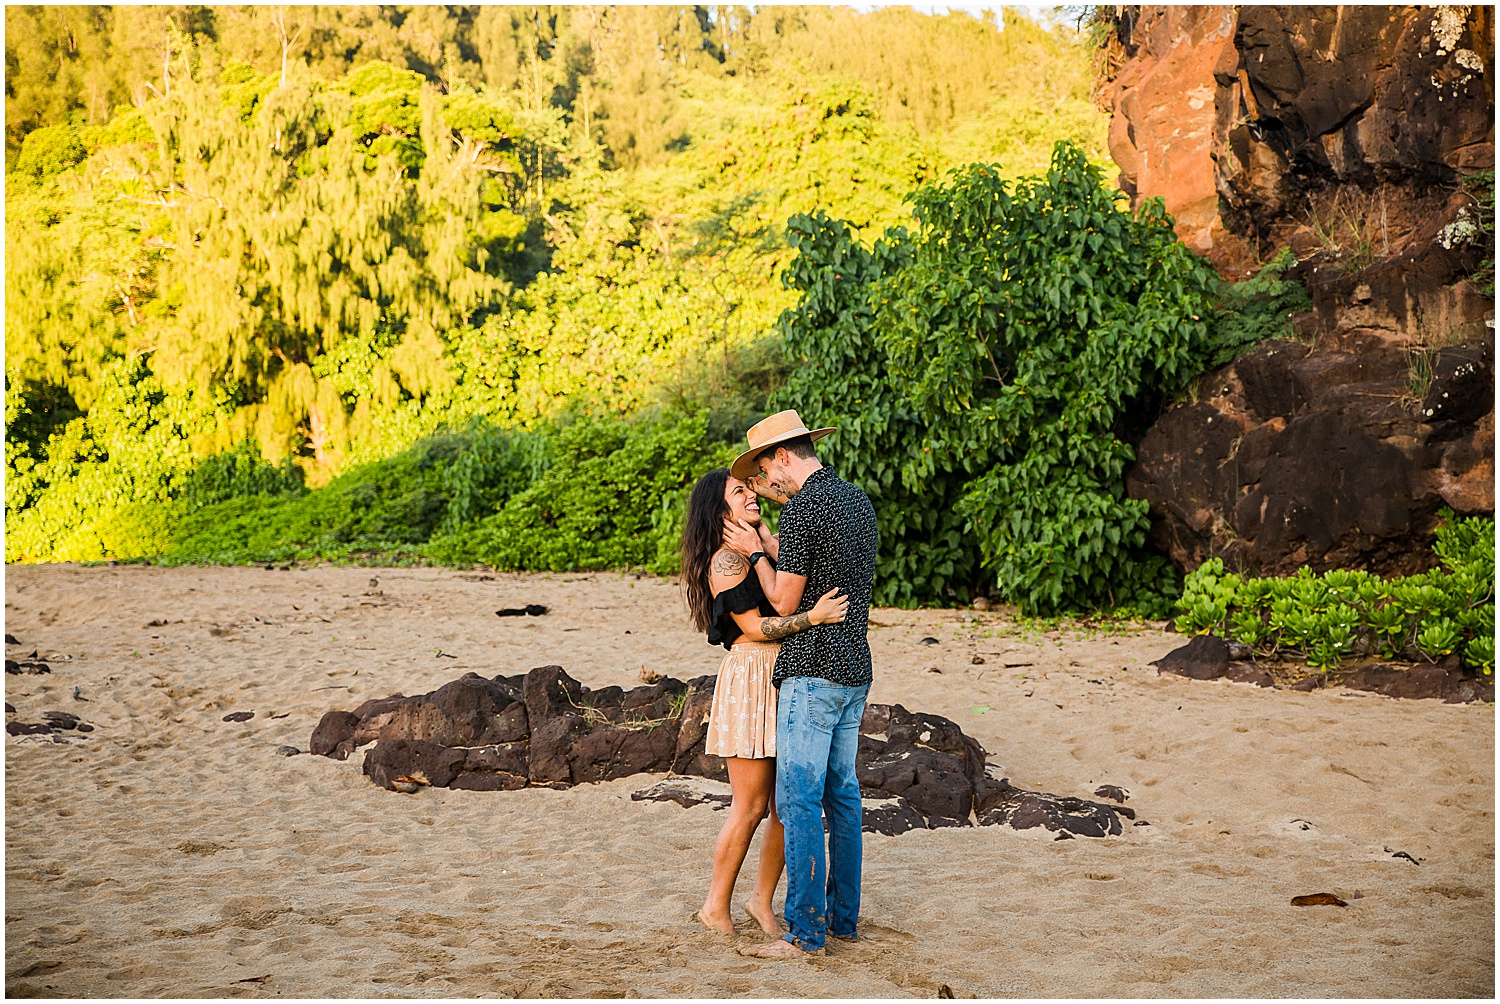 Sunrise Couples Photos On The Beach, Kauai portrait photographer, destination photographer, sunrise portraits, beach photo session, husband and wife, Hawaii photographer